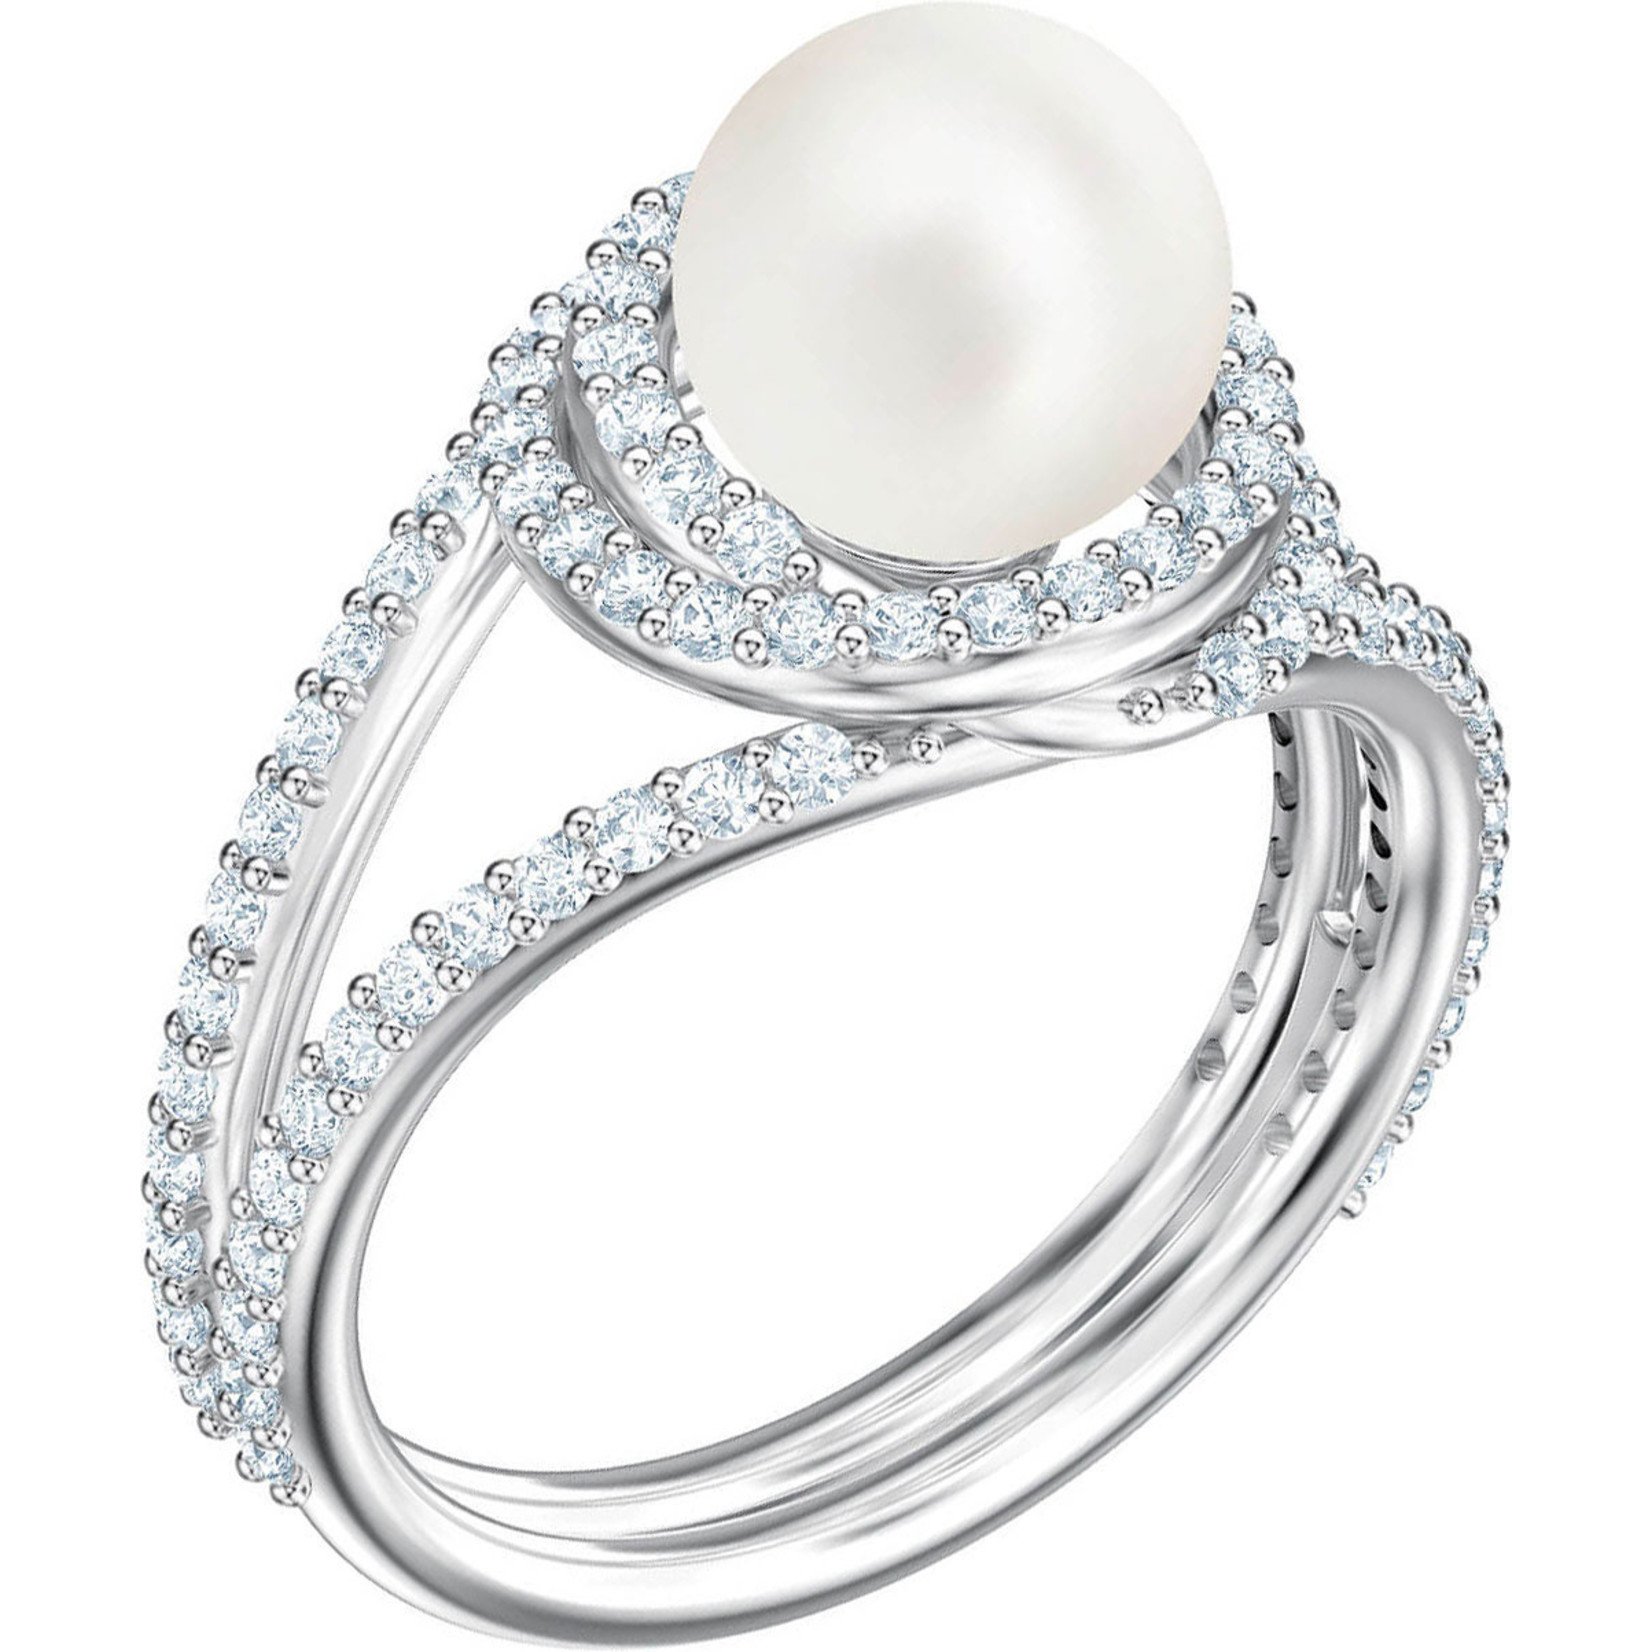 Originally Ring, Pearl, Size 52